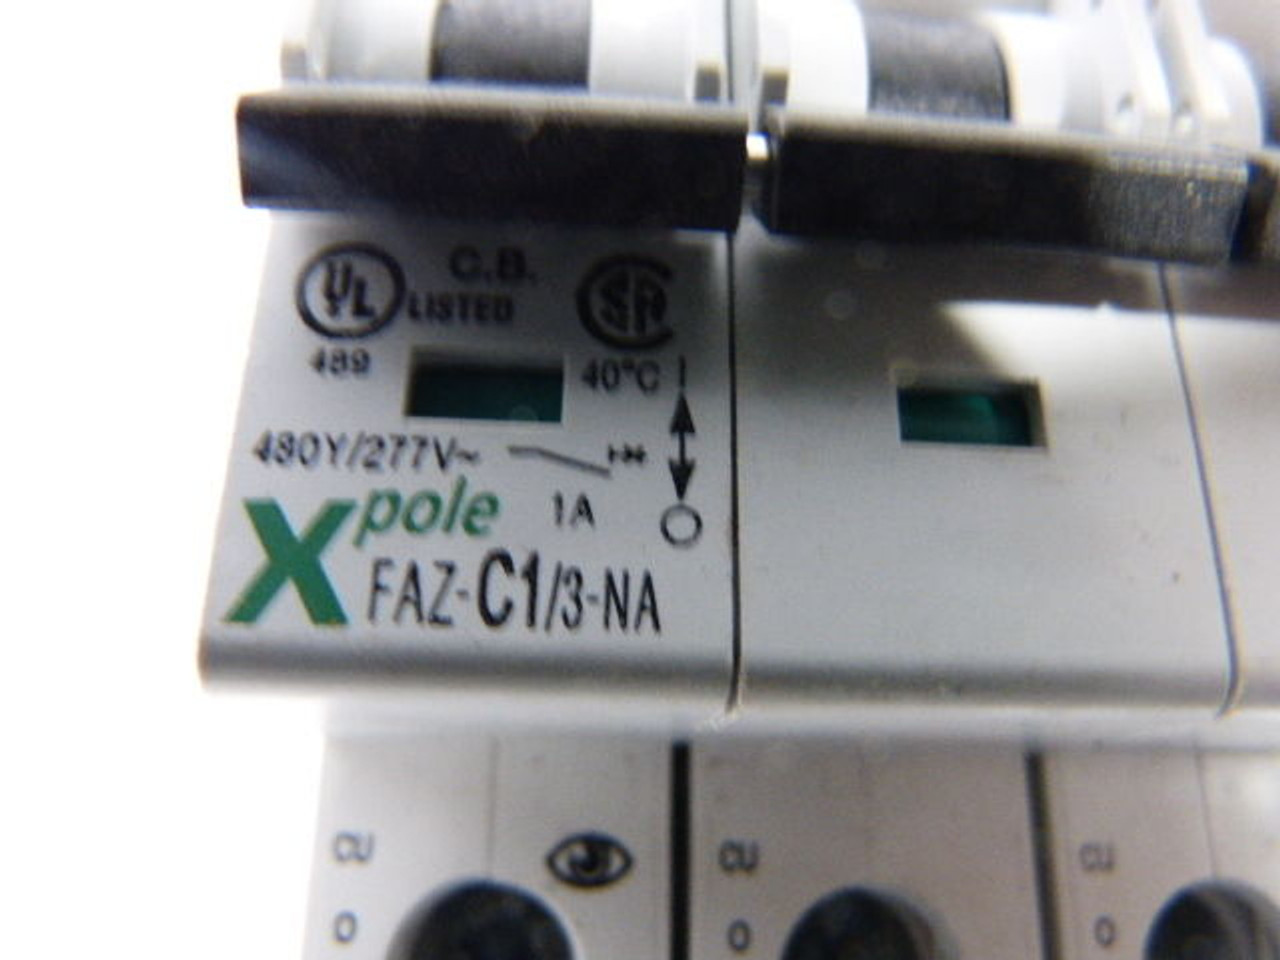 Moeller FAZ-C1/3-NA Miniature C-Curve Circuit Breaker 3-Pole 1Amp USED